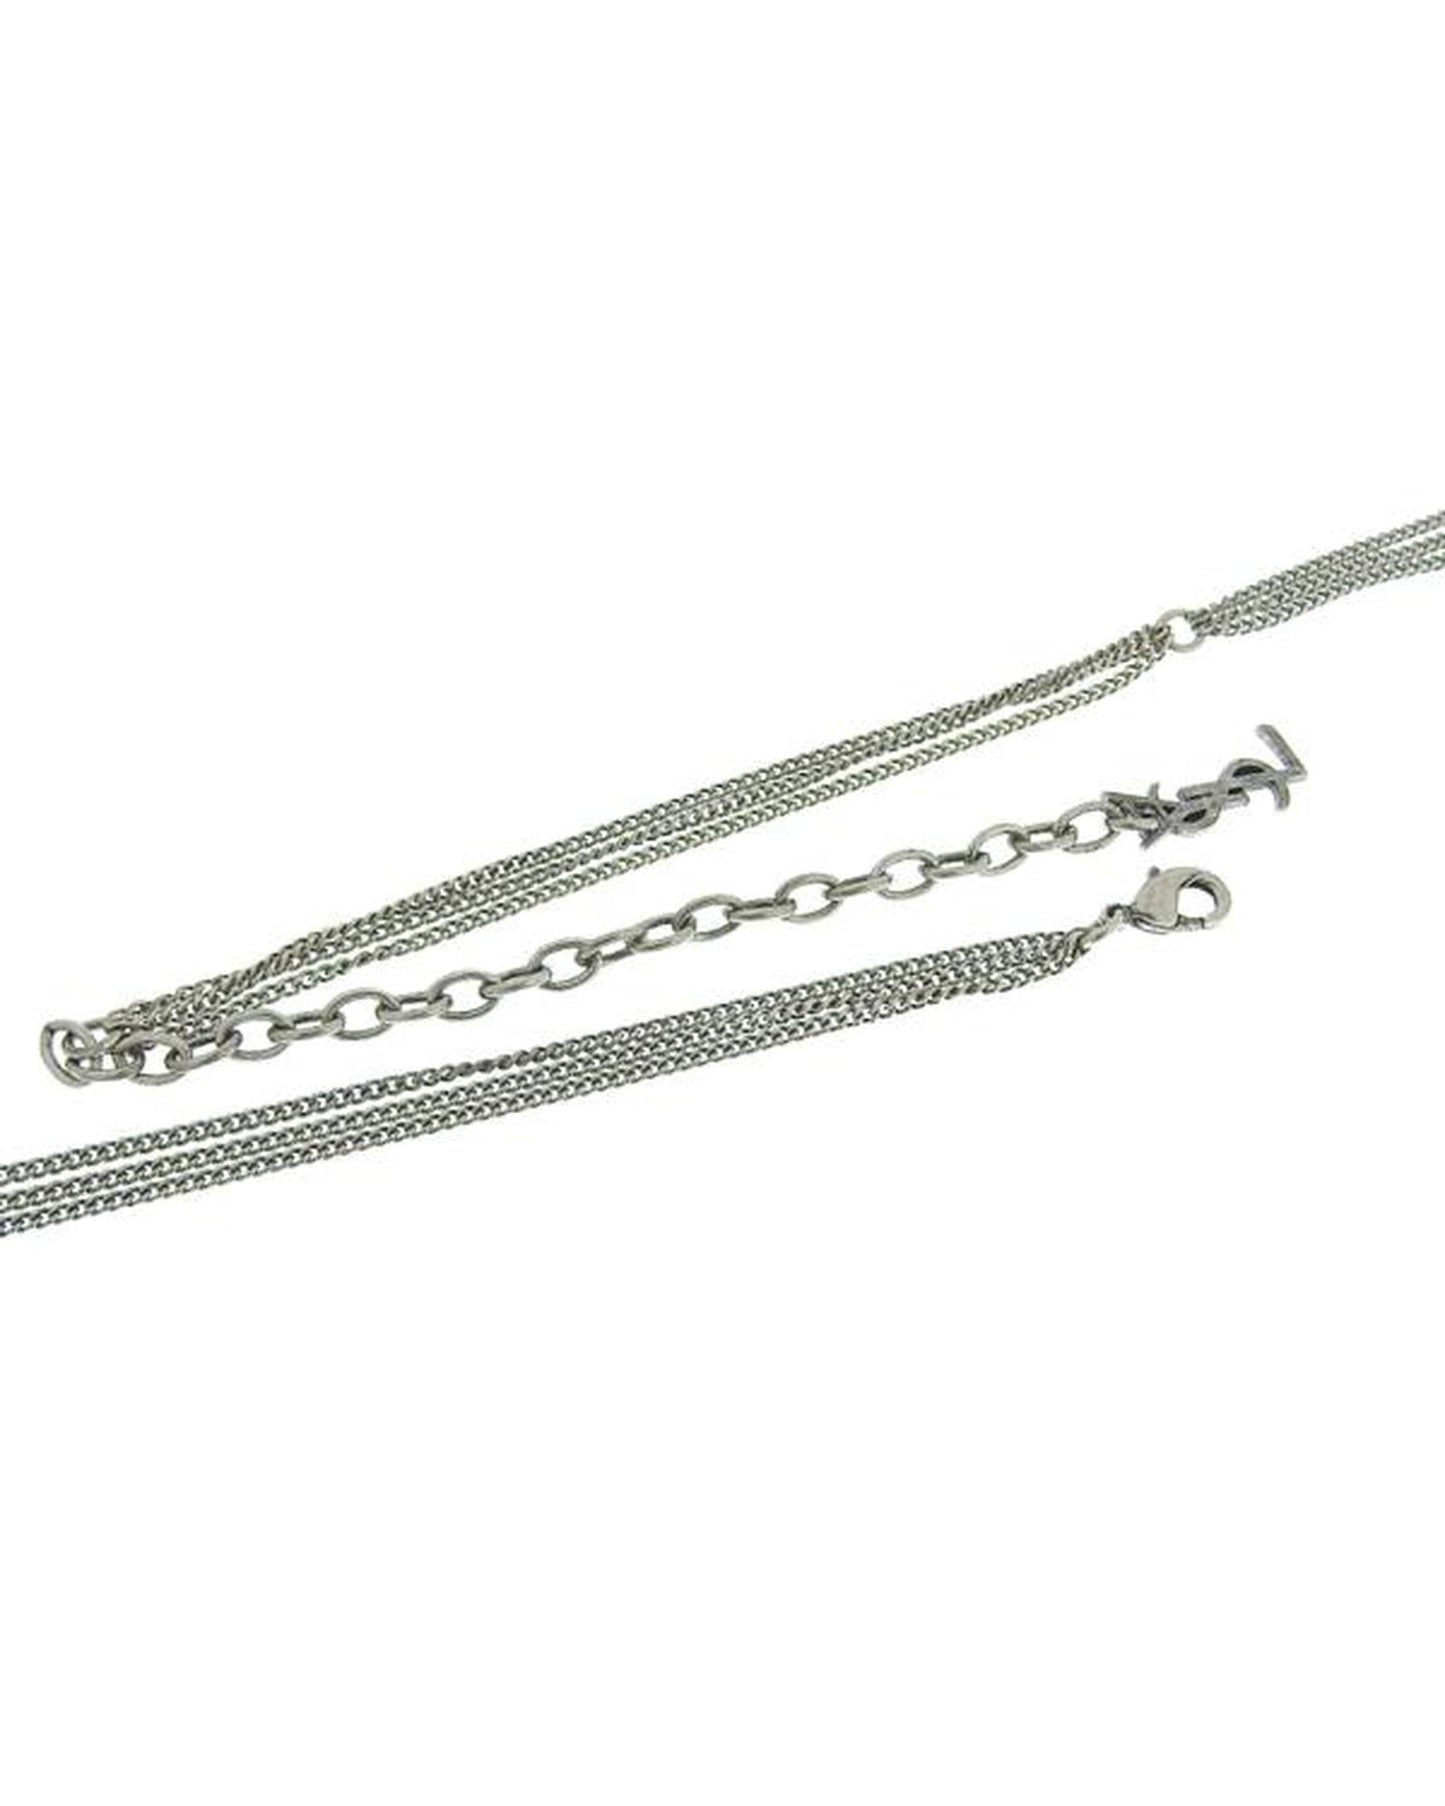 Yves Saint Laurent Women's Tassel Necklace in Silver Finish in Silver